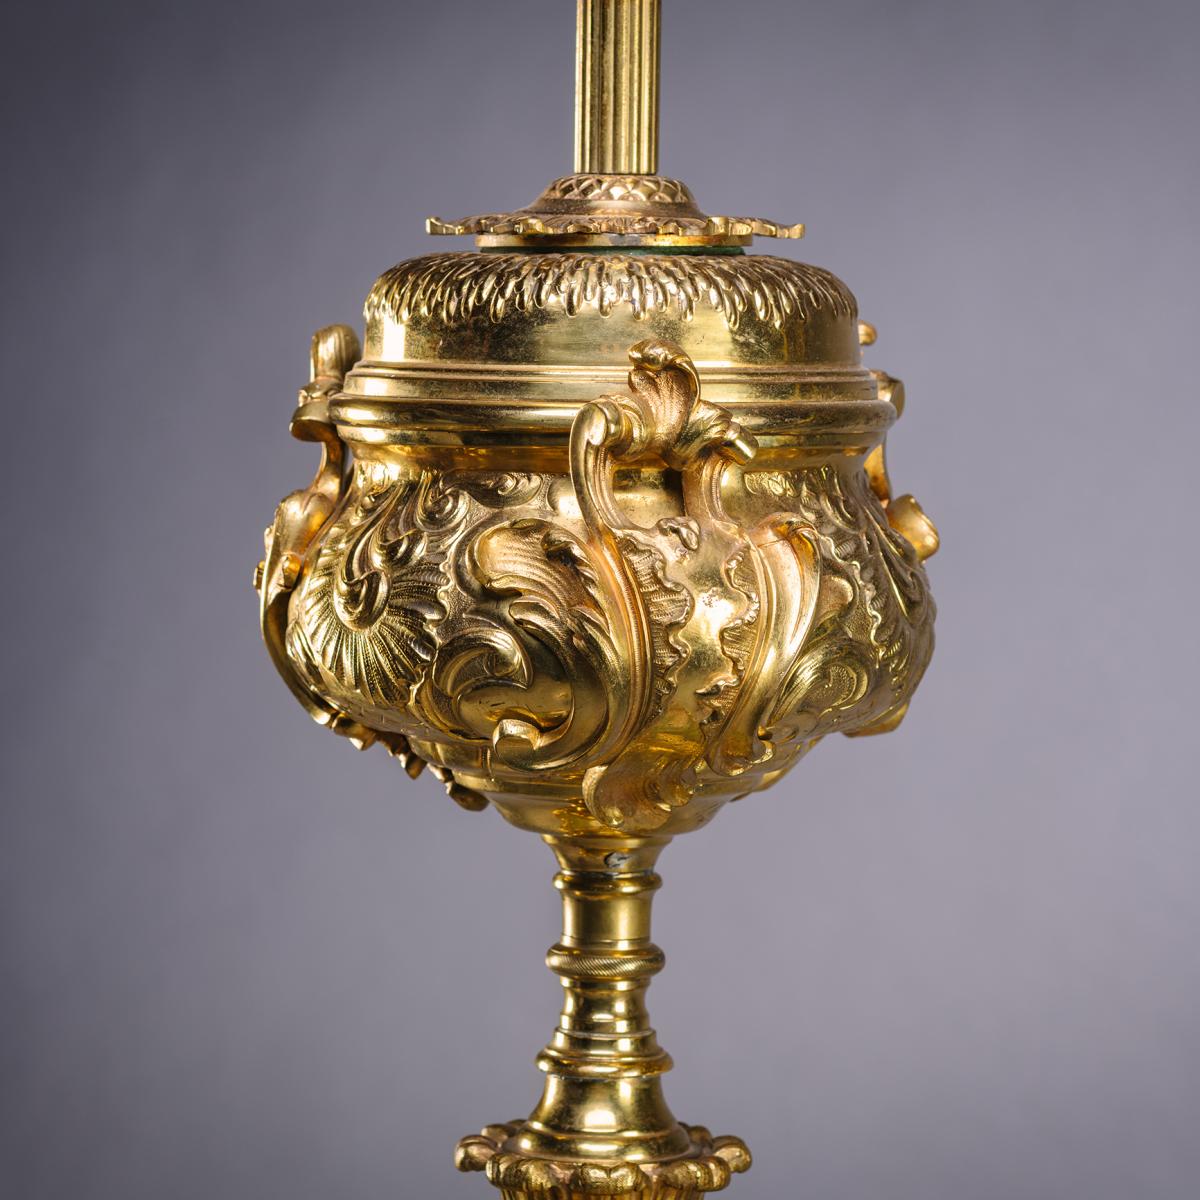 Edwardian Gilt-Bronze Standard Lamp Tier Table